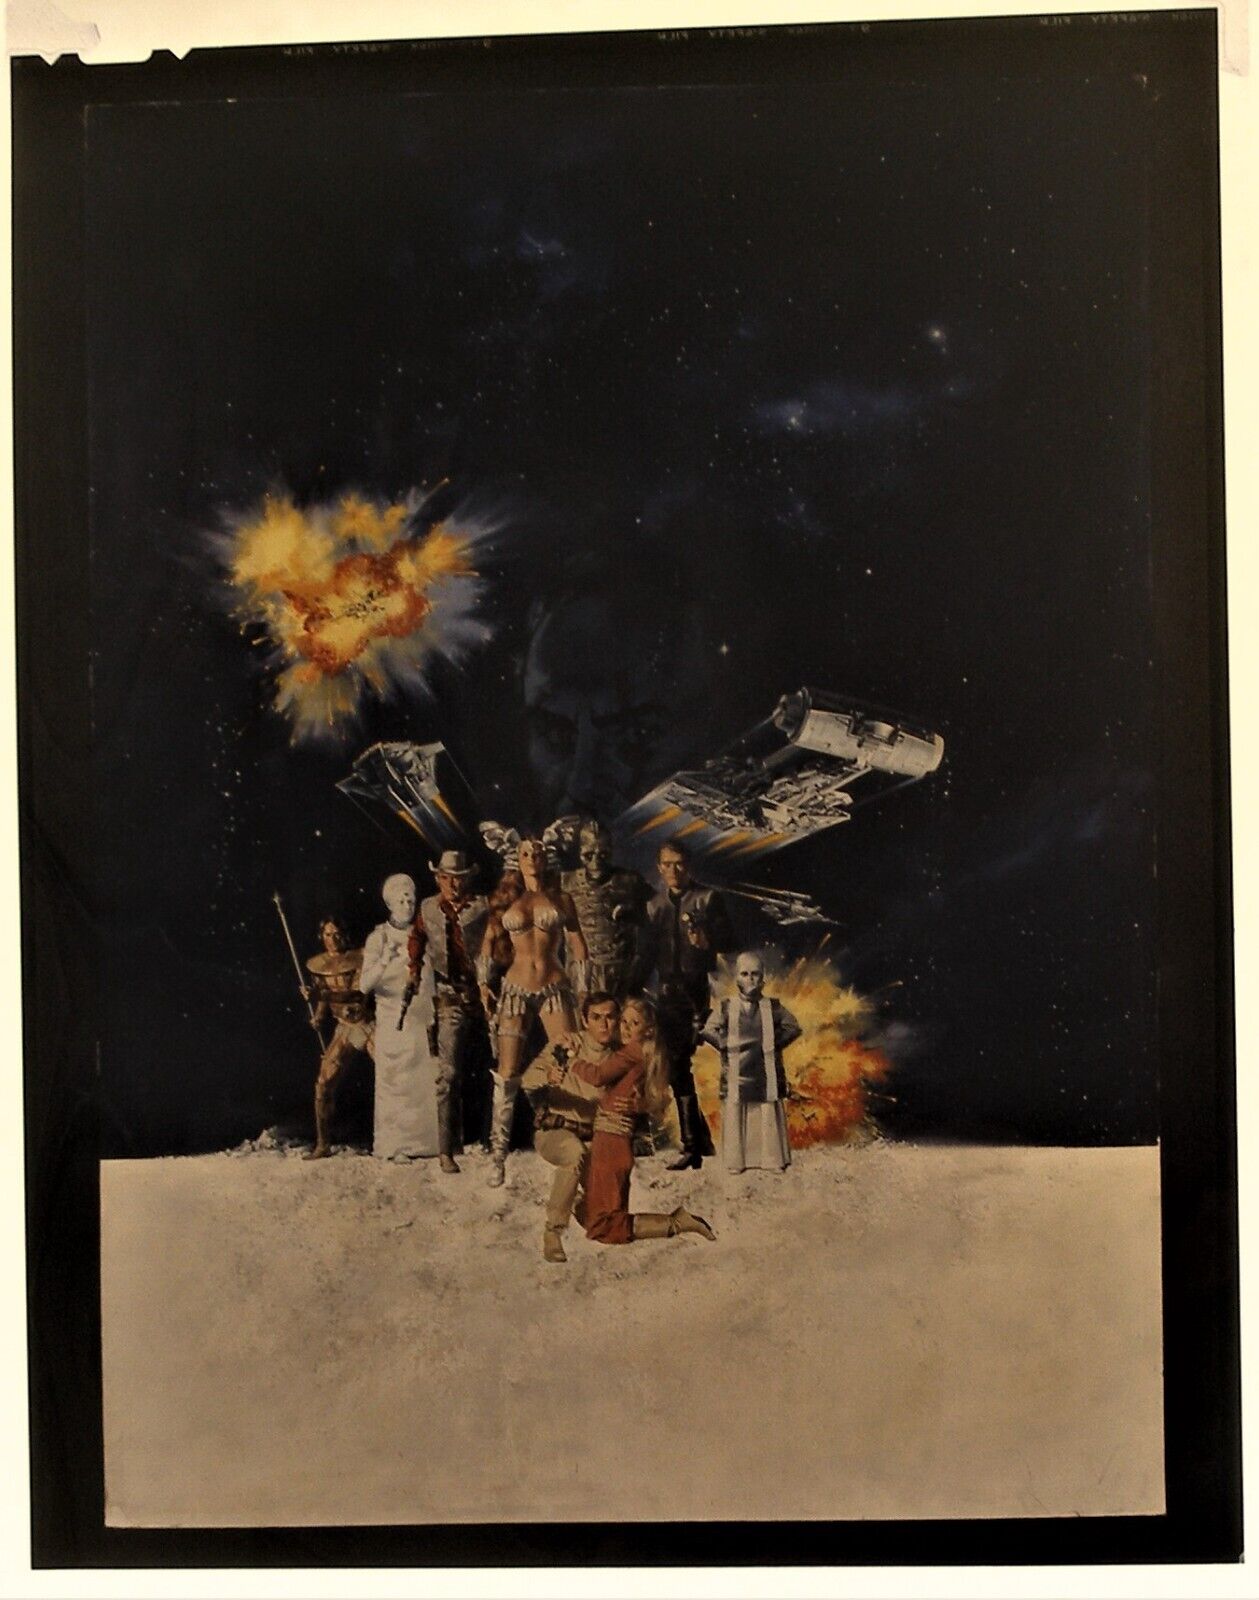 Battle Beyond The Stars (1980) Sci-fi Cult Classic Original Artwork Transparency